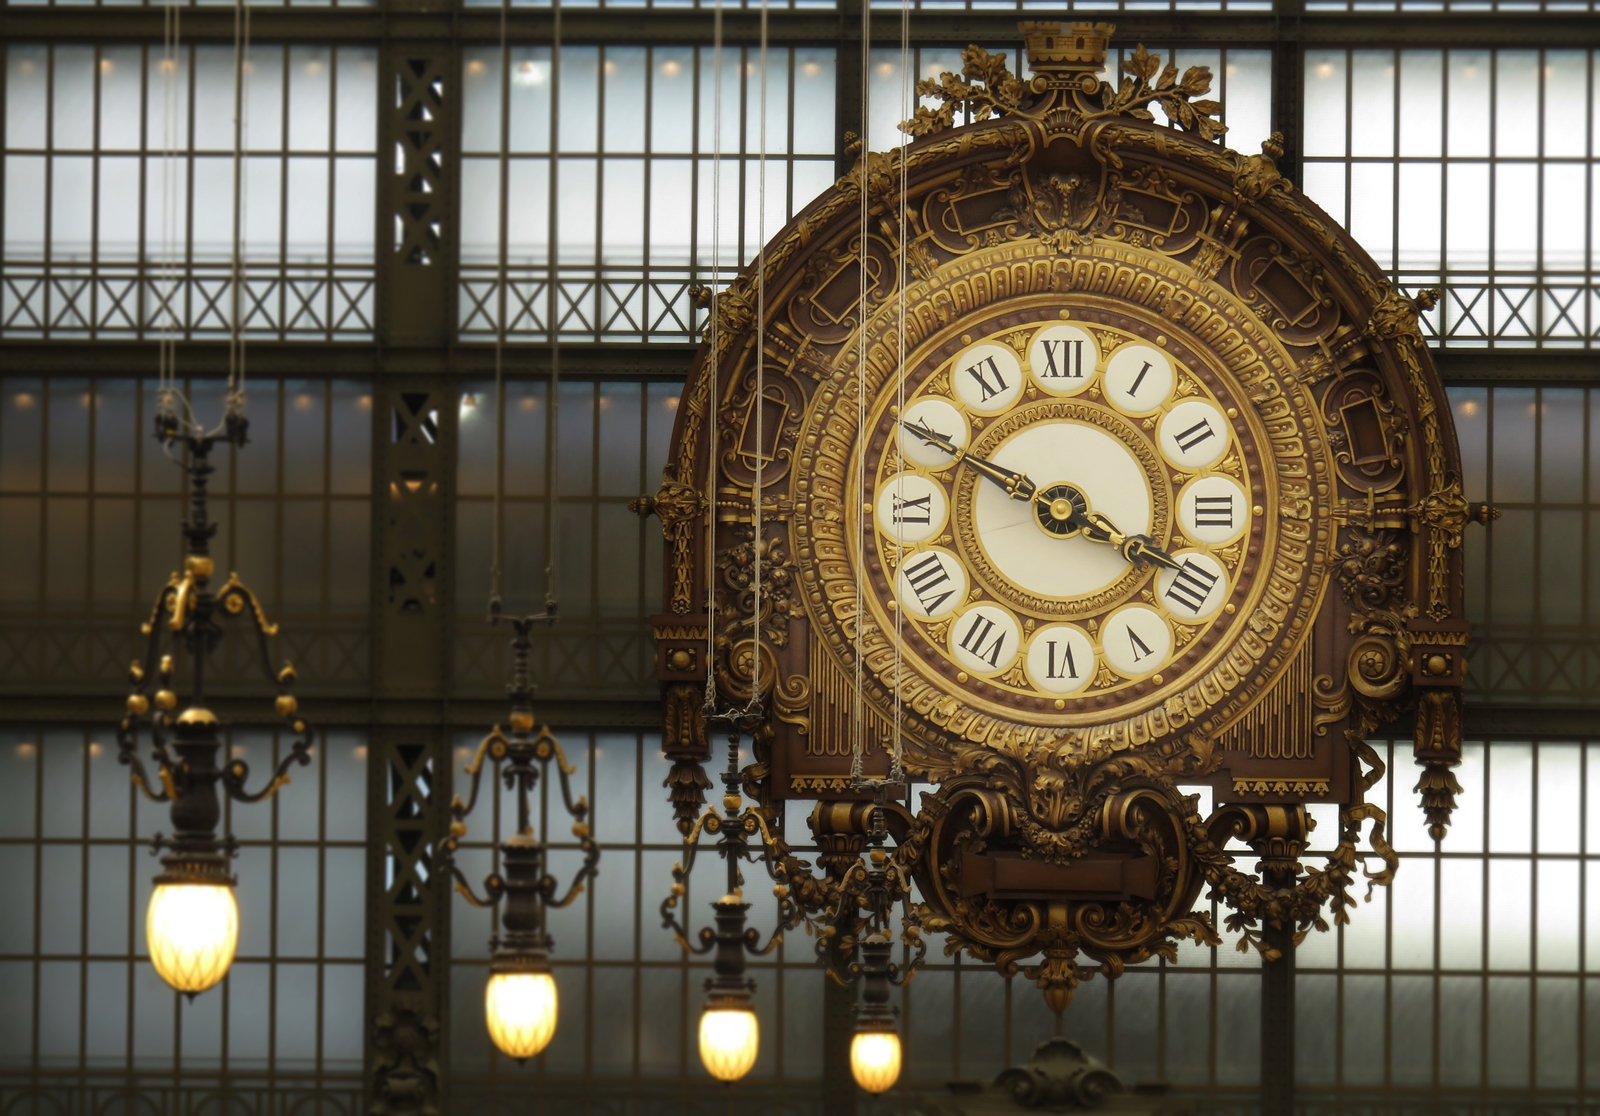 Large ornate clock